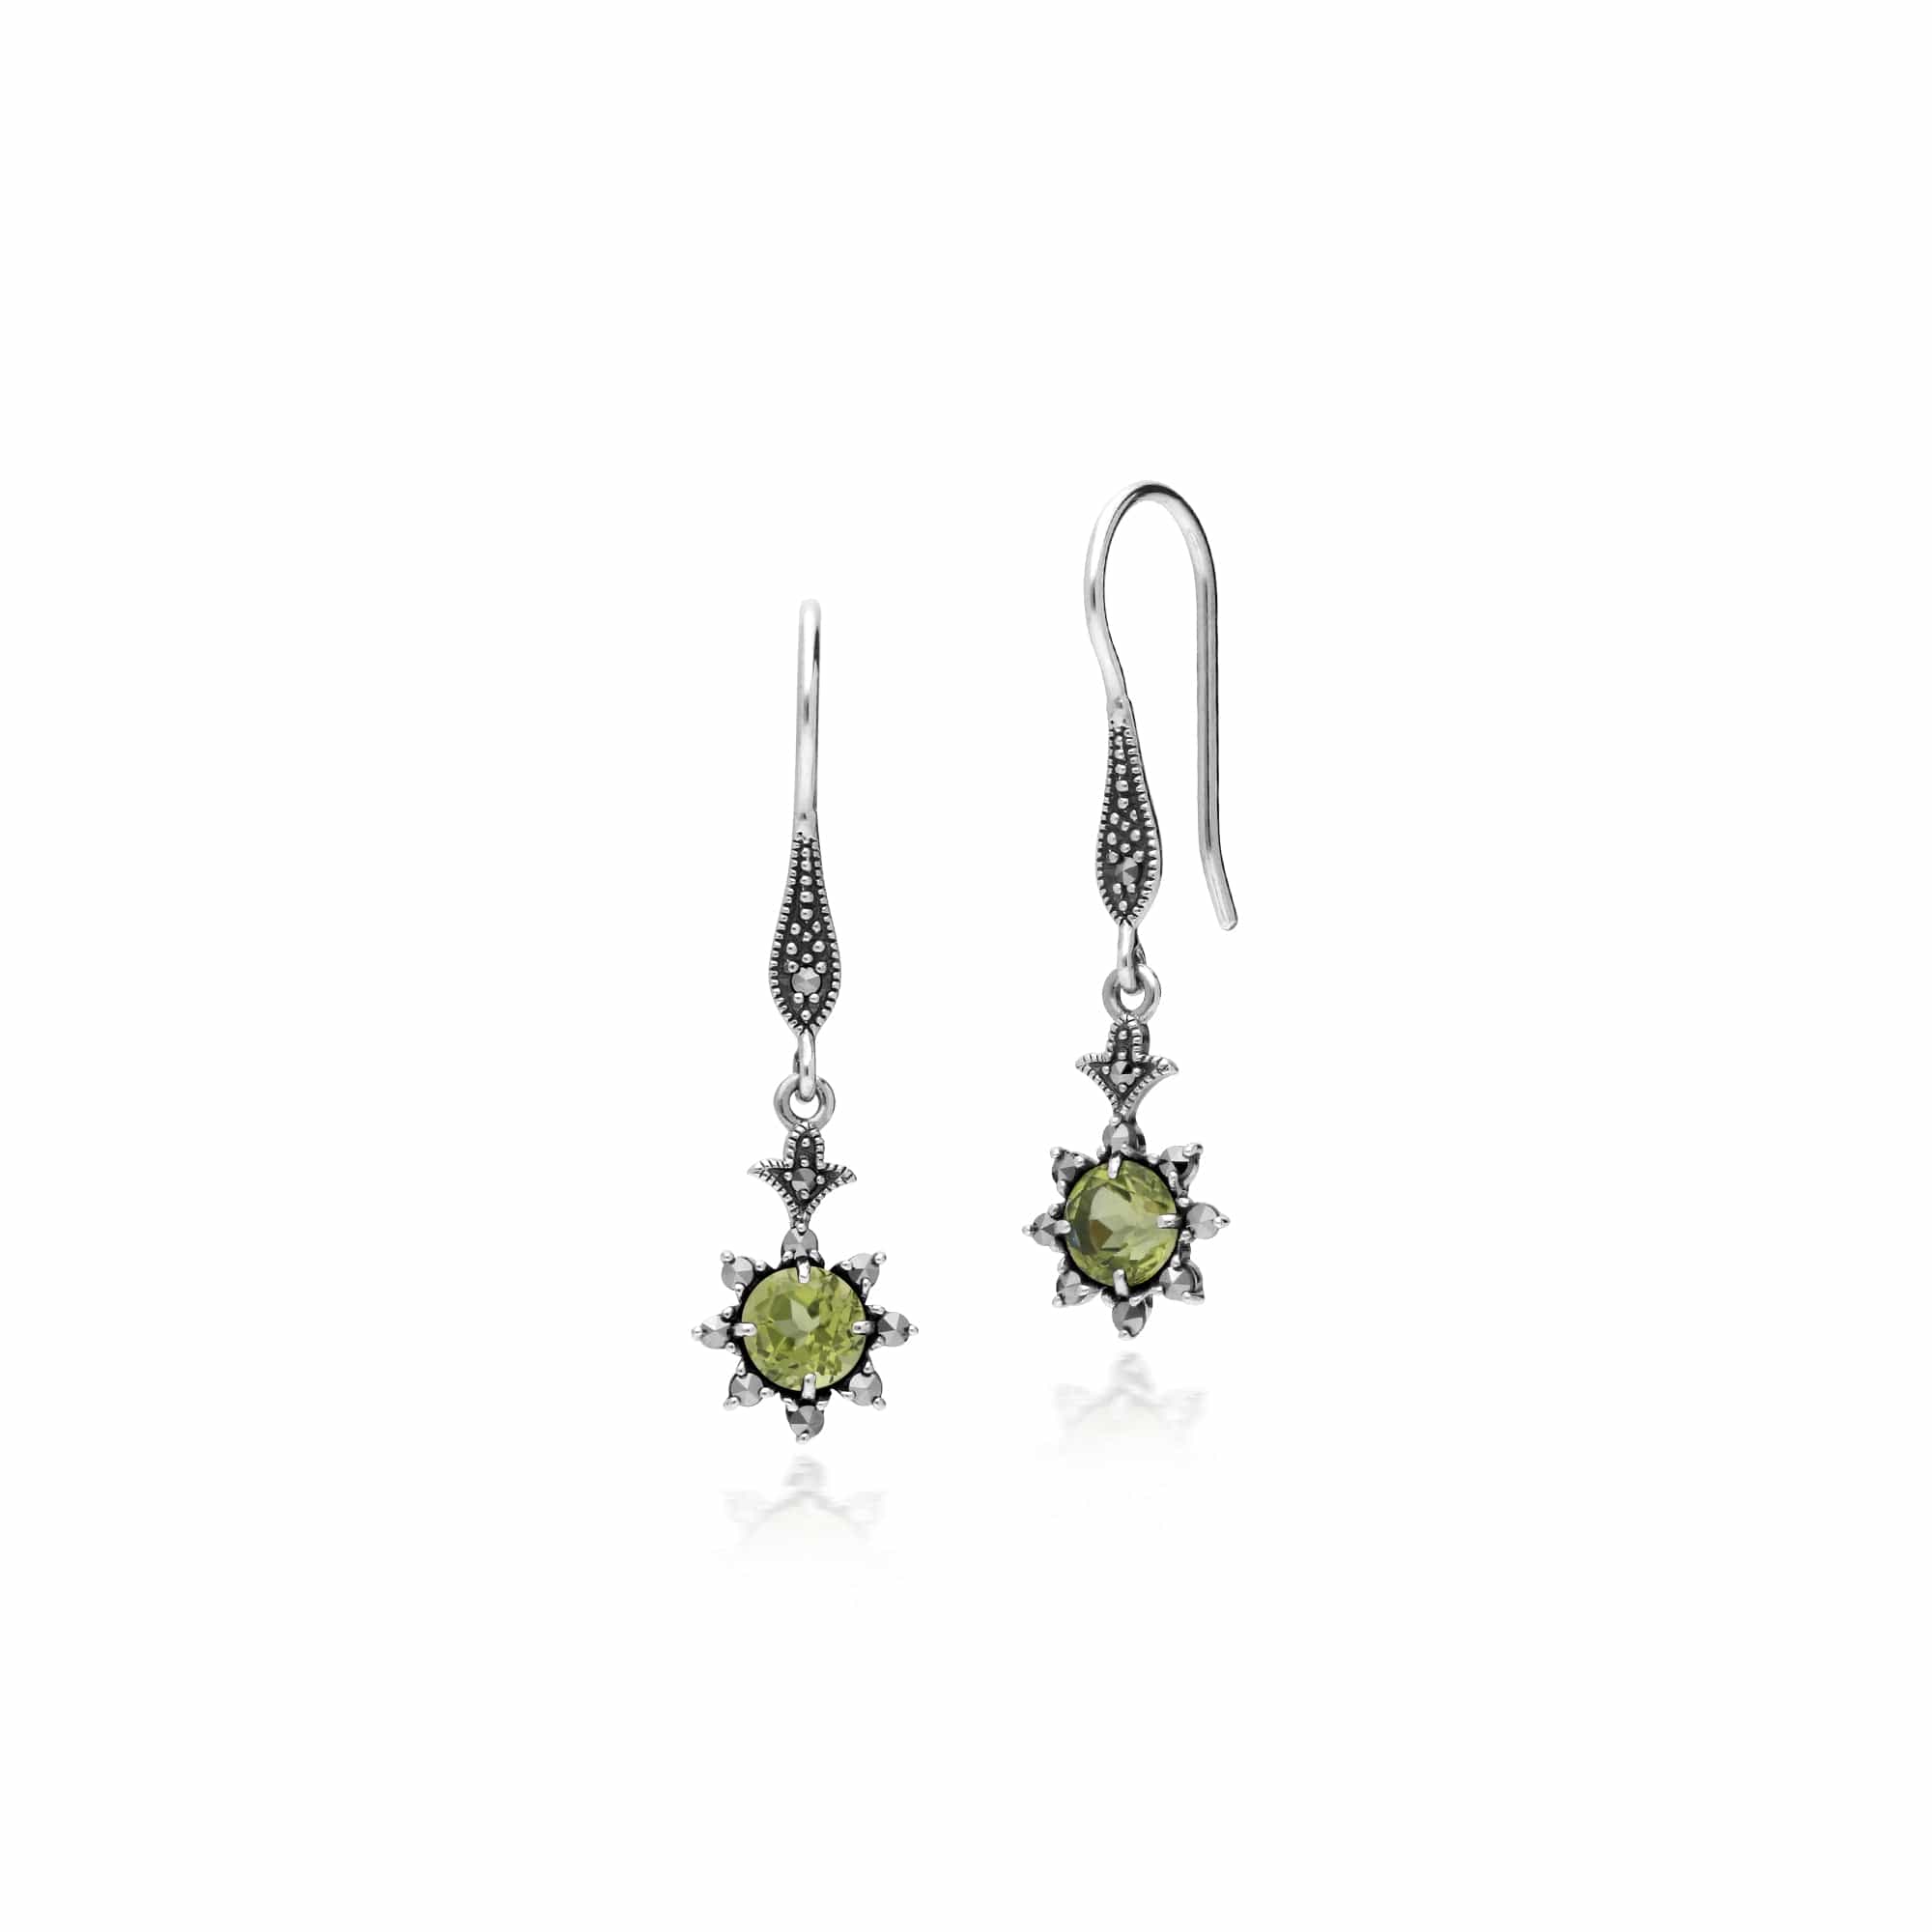 Floral Round Peridot & Marcasite Drop Earrings in 925 Sterling Silver - Gemondo